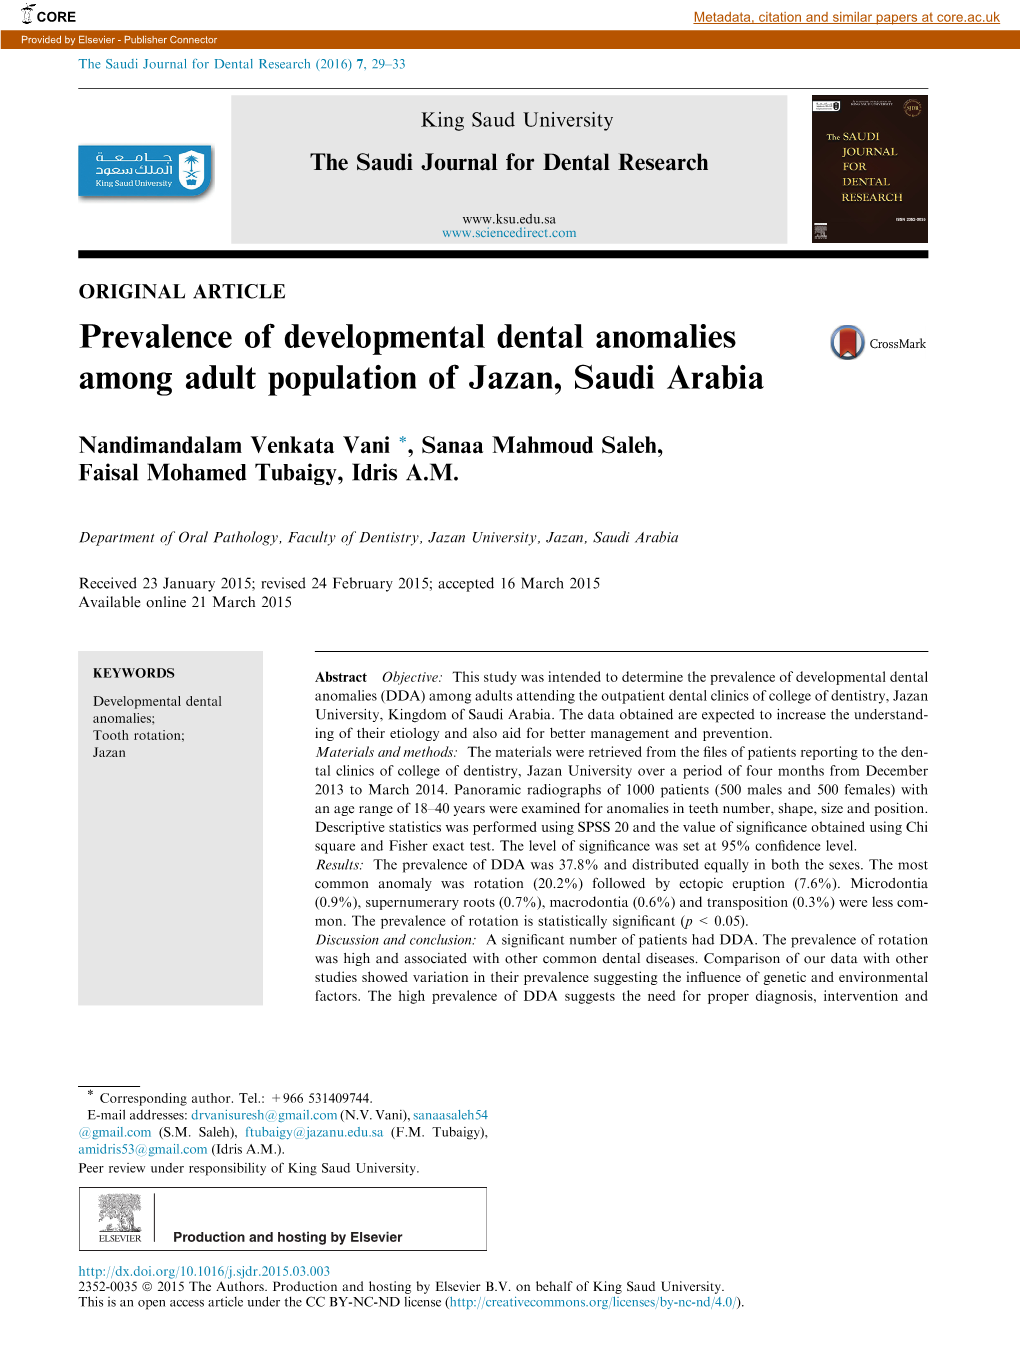 Prevalence of Developmental Dental Anomalies Among Adult Population of Jazan, Saudi Arabia